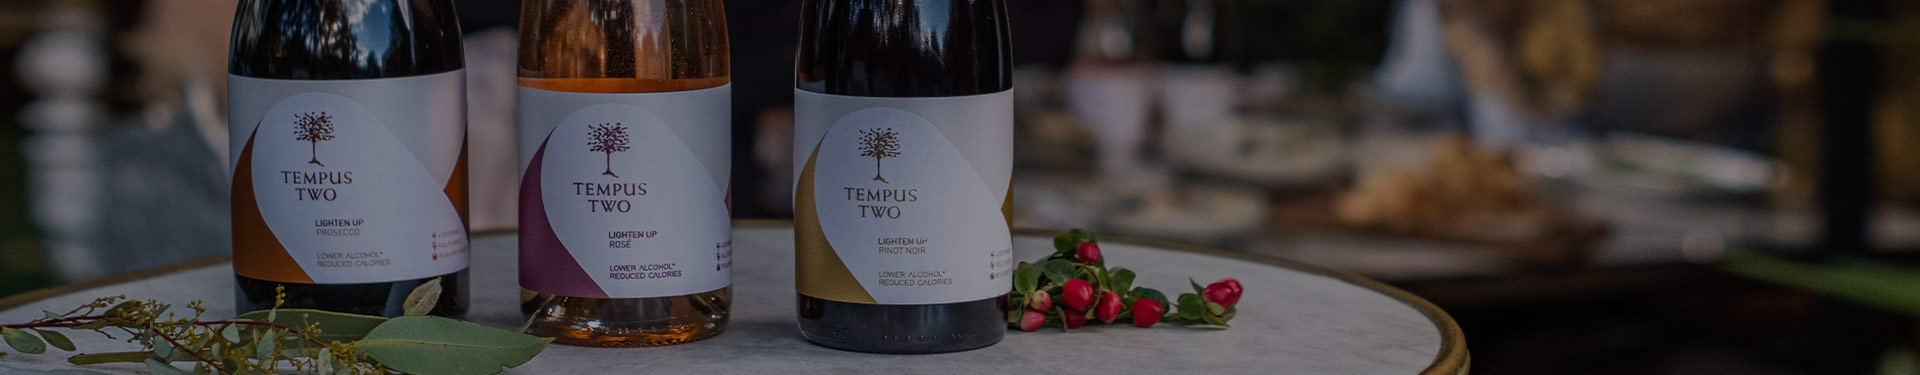 Tempus Two Lighten Up range - Rose, Shiraz and Pinot Noir